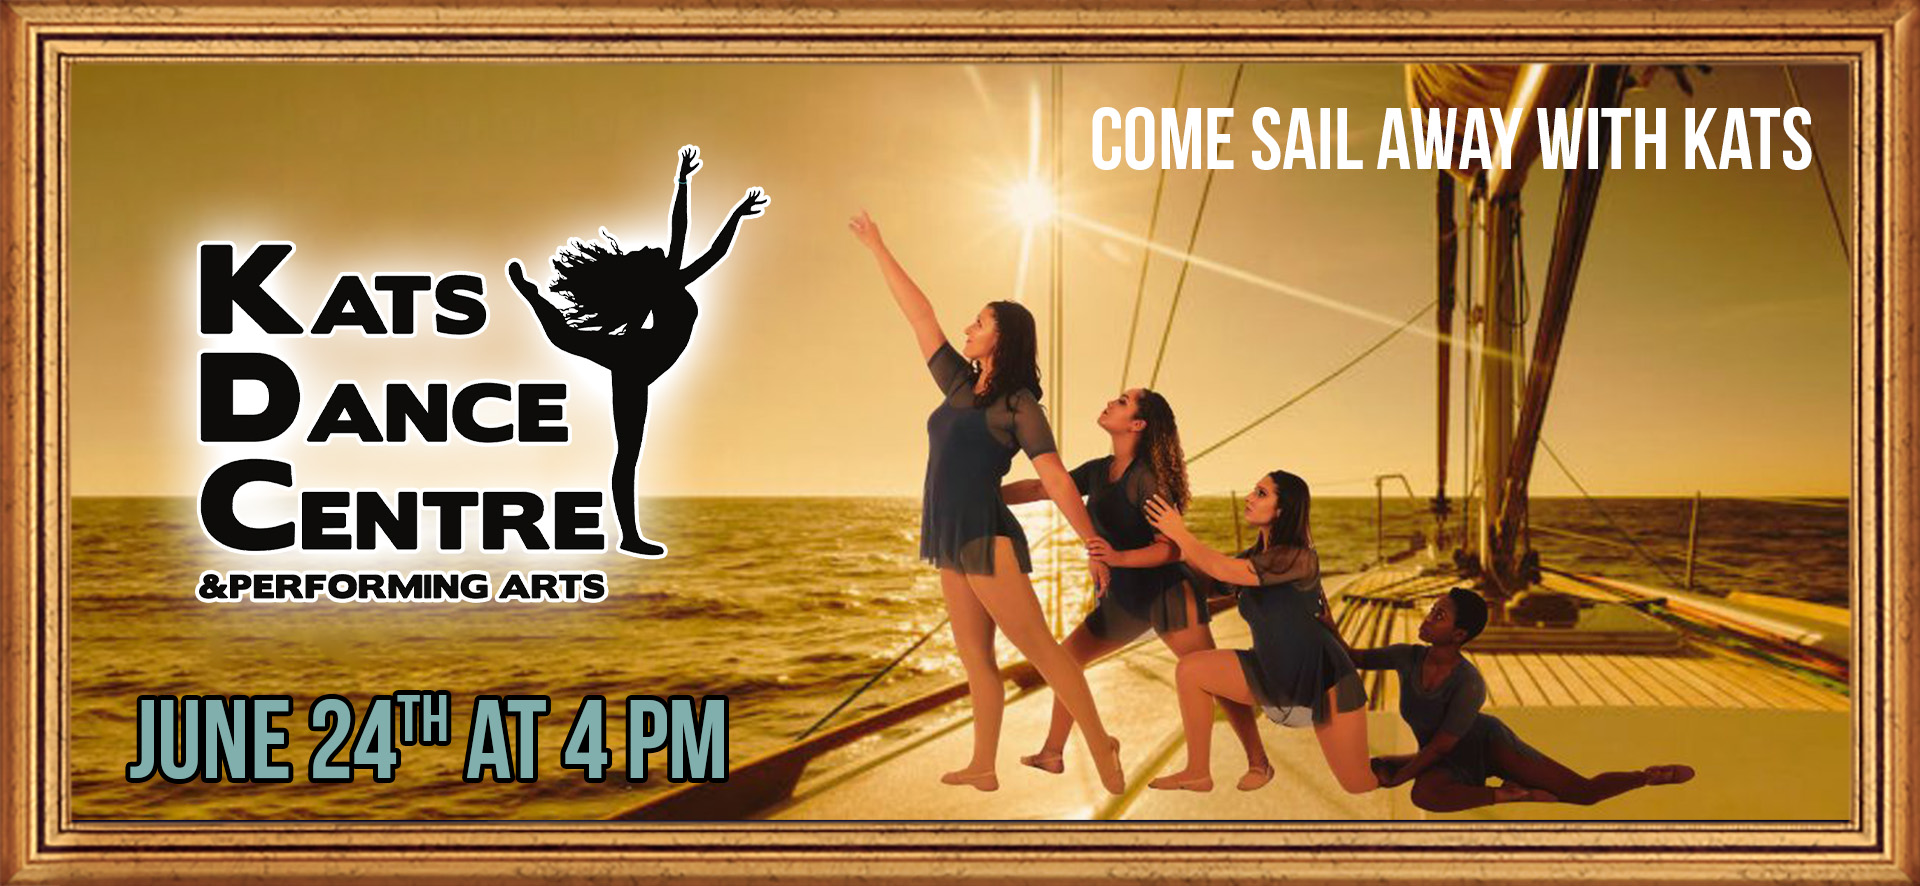 Kats Dance Centre & Performing Arts presents "Come Sail Away with Kats"